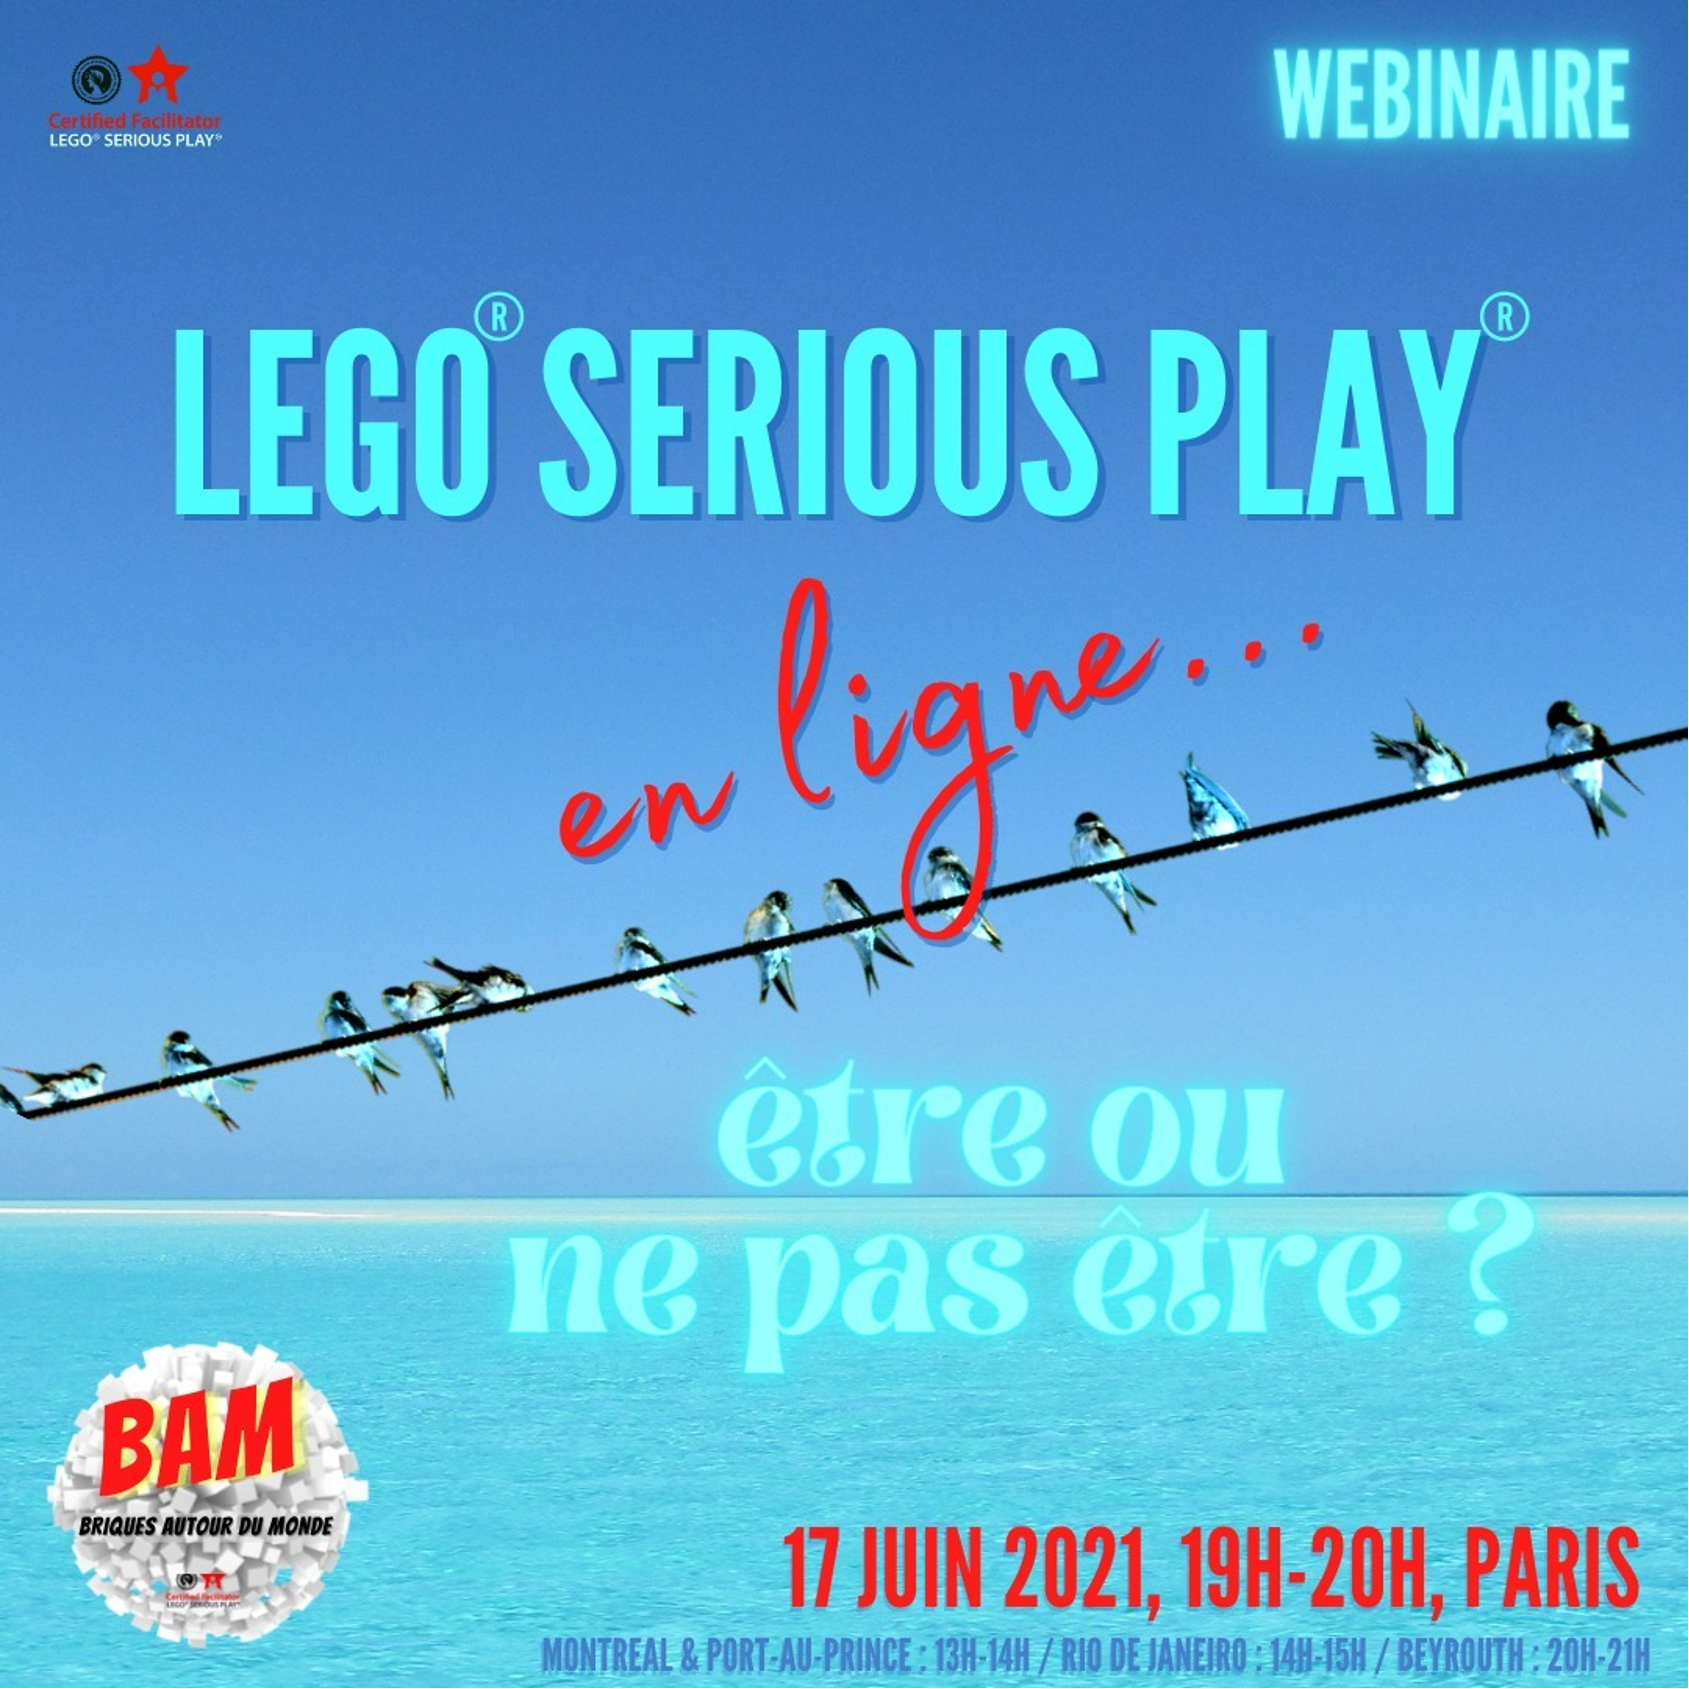 LEGO SERIOUS PLAY Online // Webinar // BAM